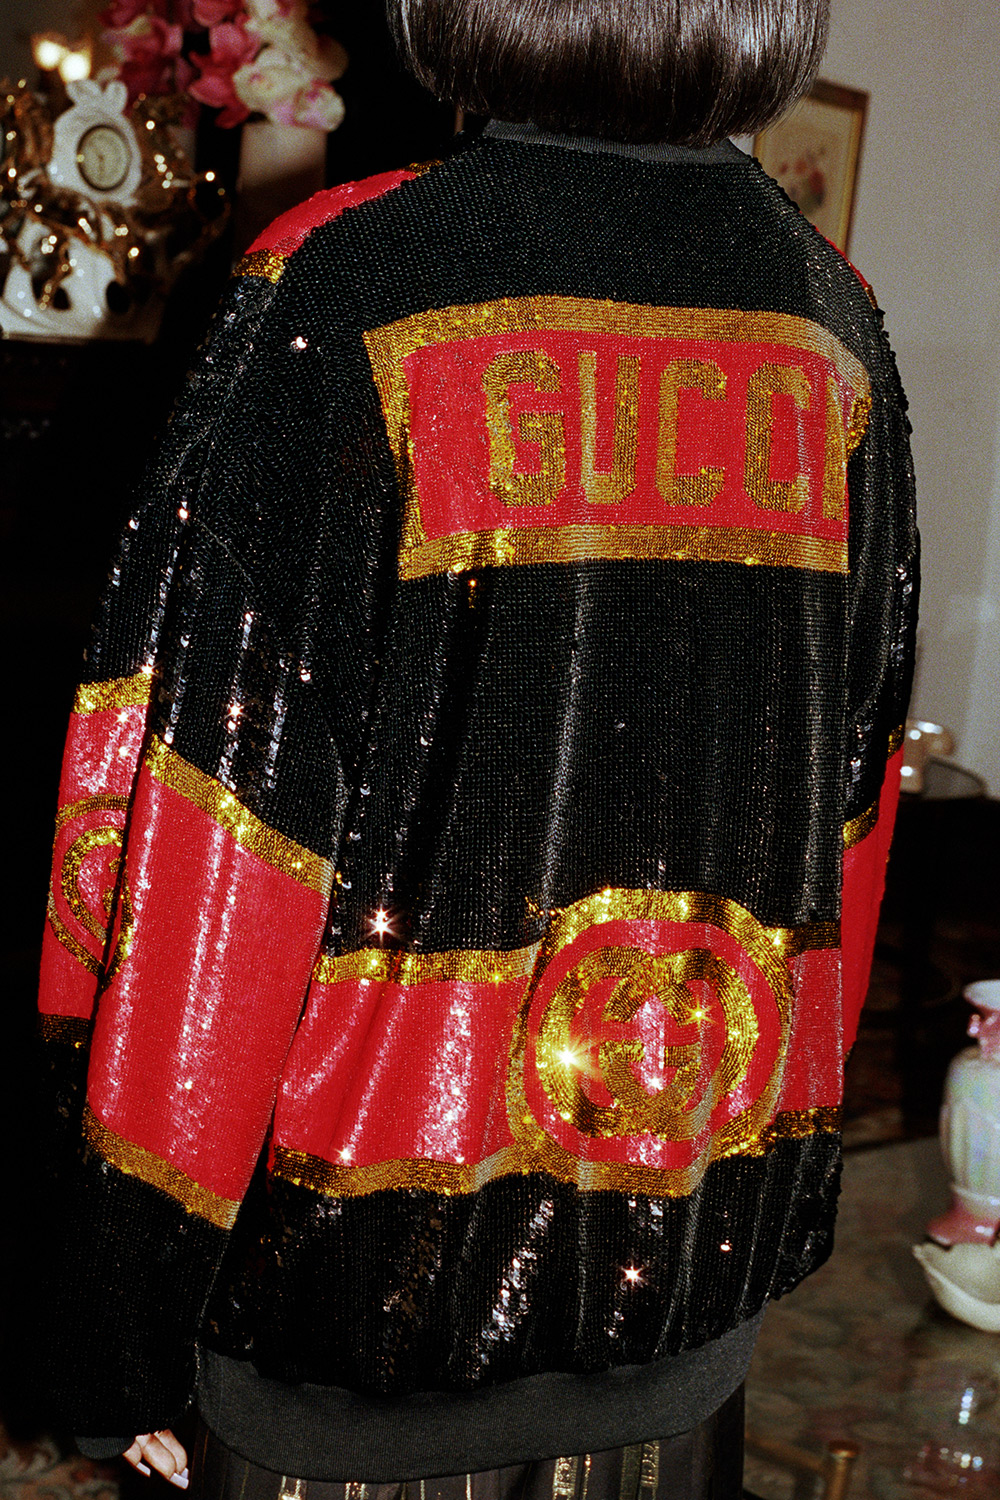 Gucci Releases Dapper Dan Collection Online - XXL